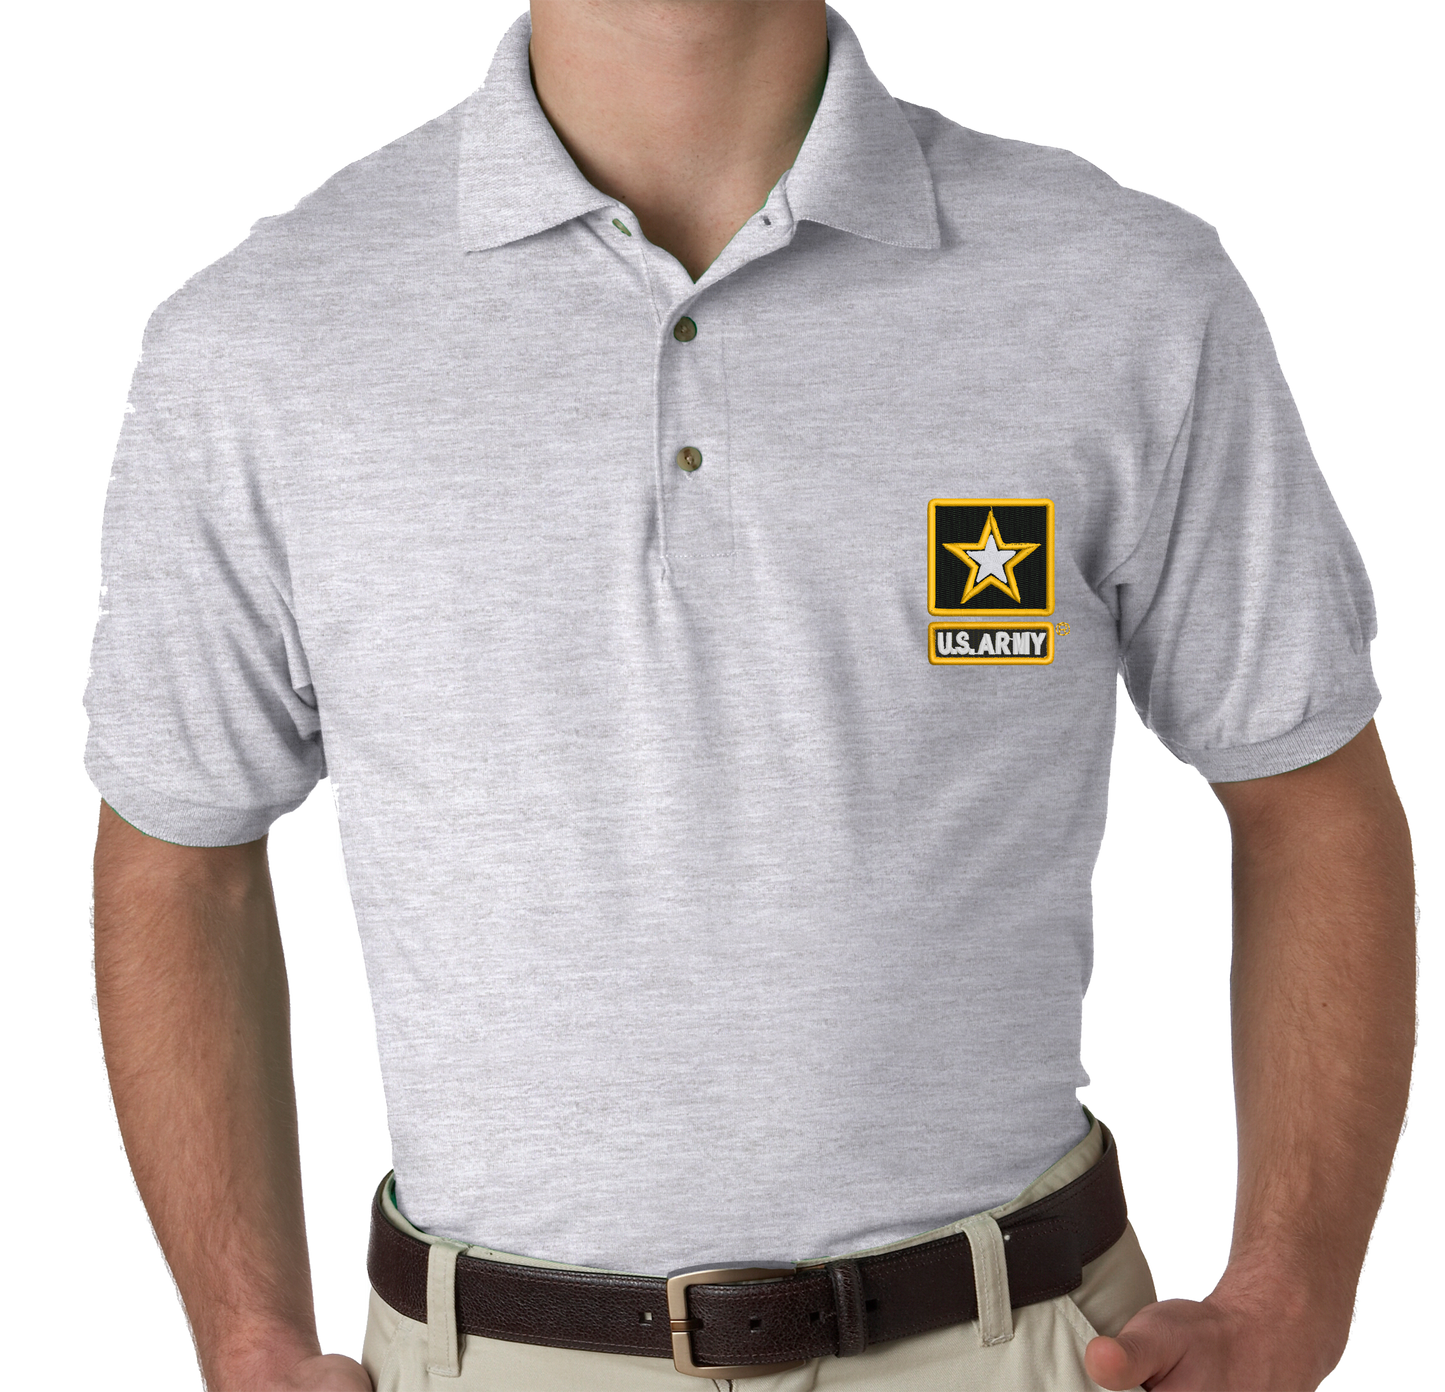 US Army Polo Shirt